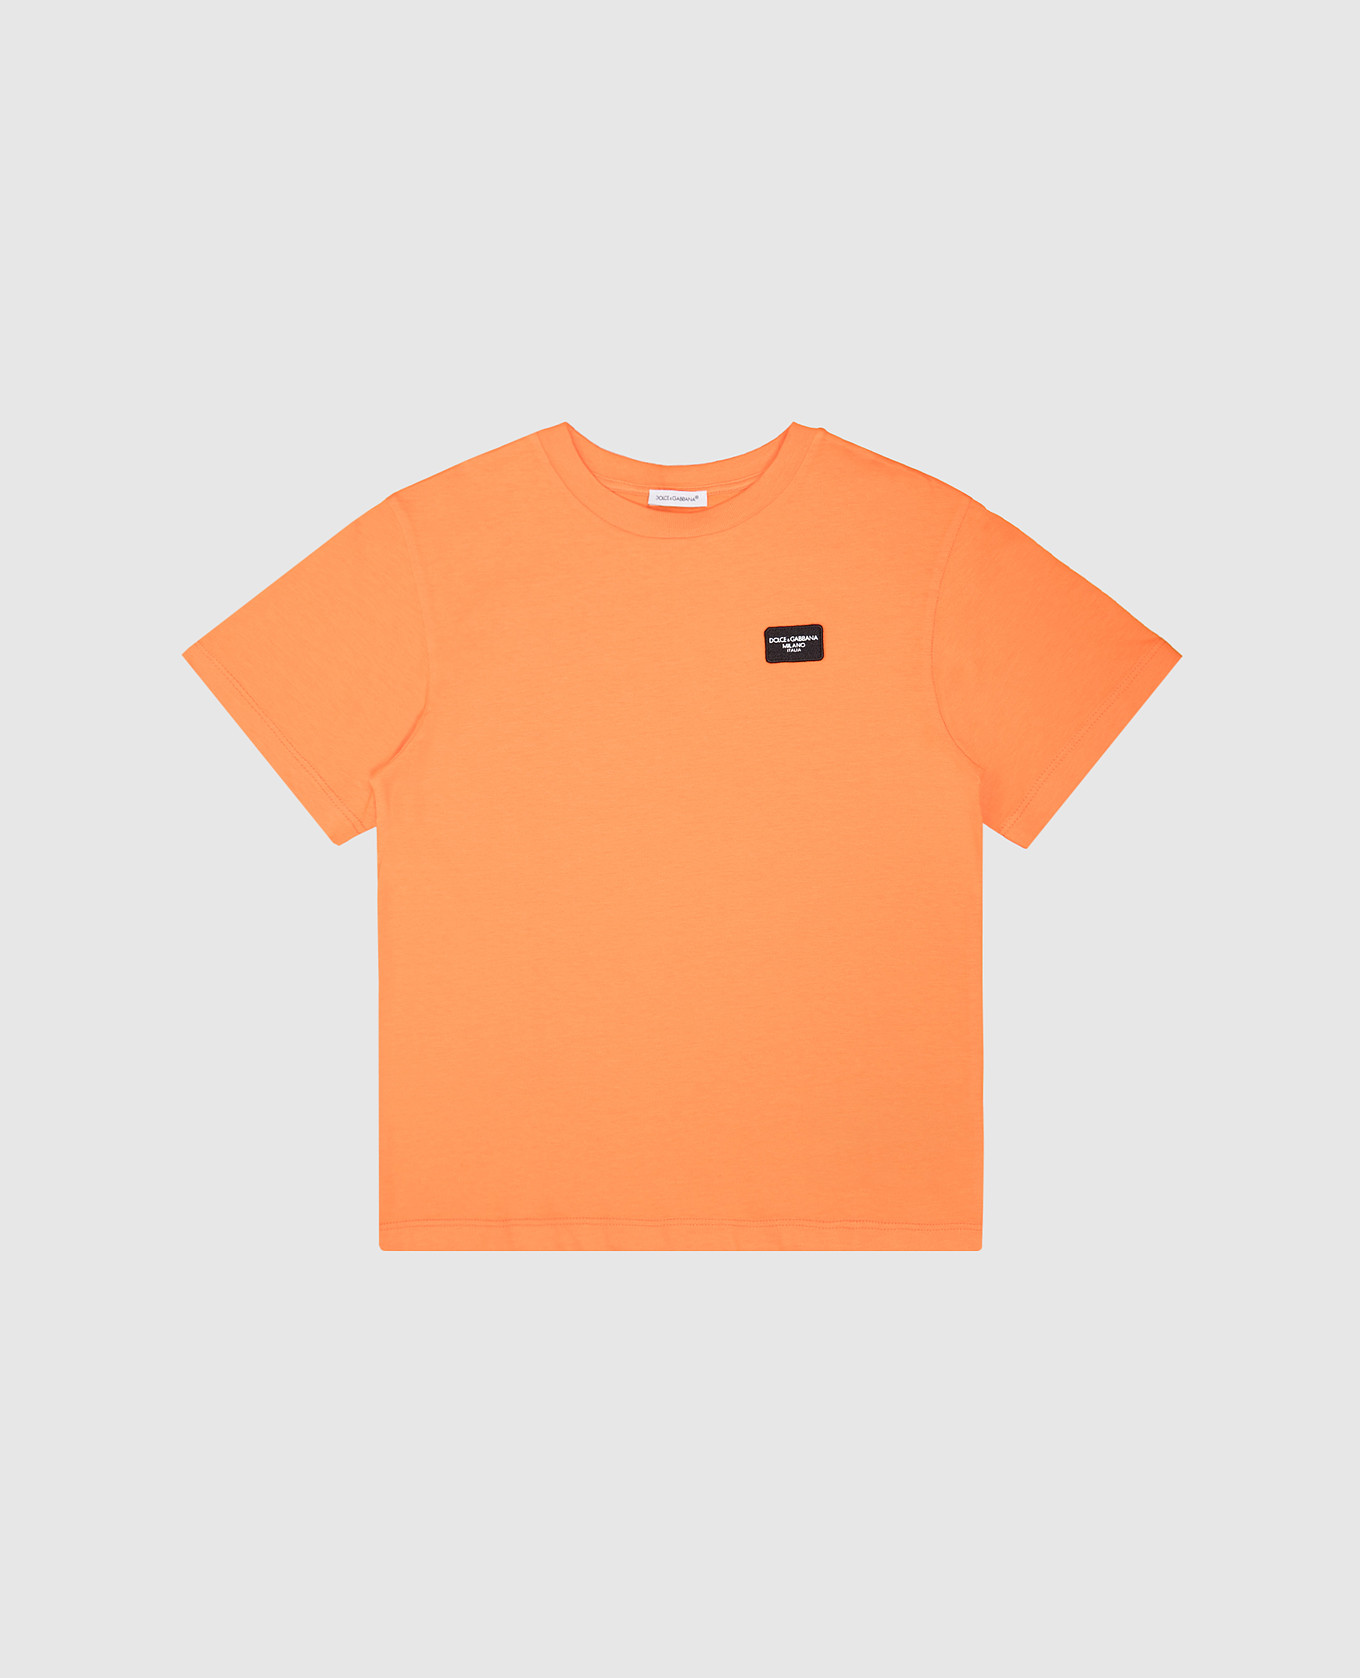 Camiseta infantil naranja con parche logo